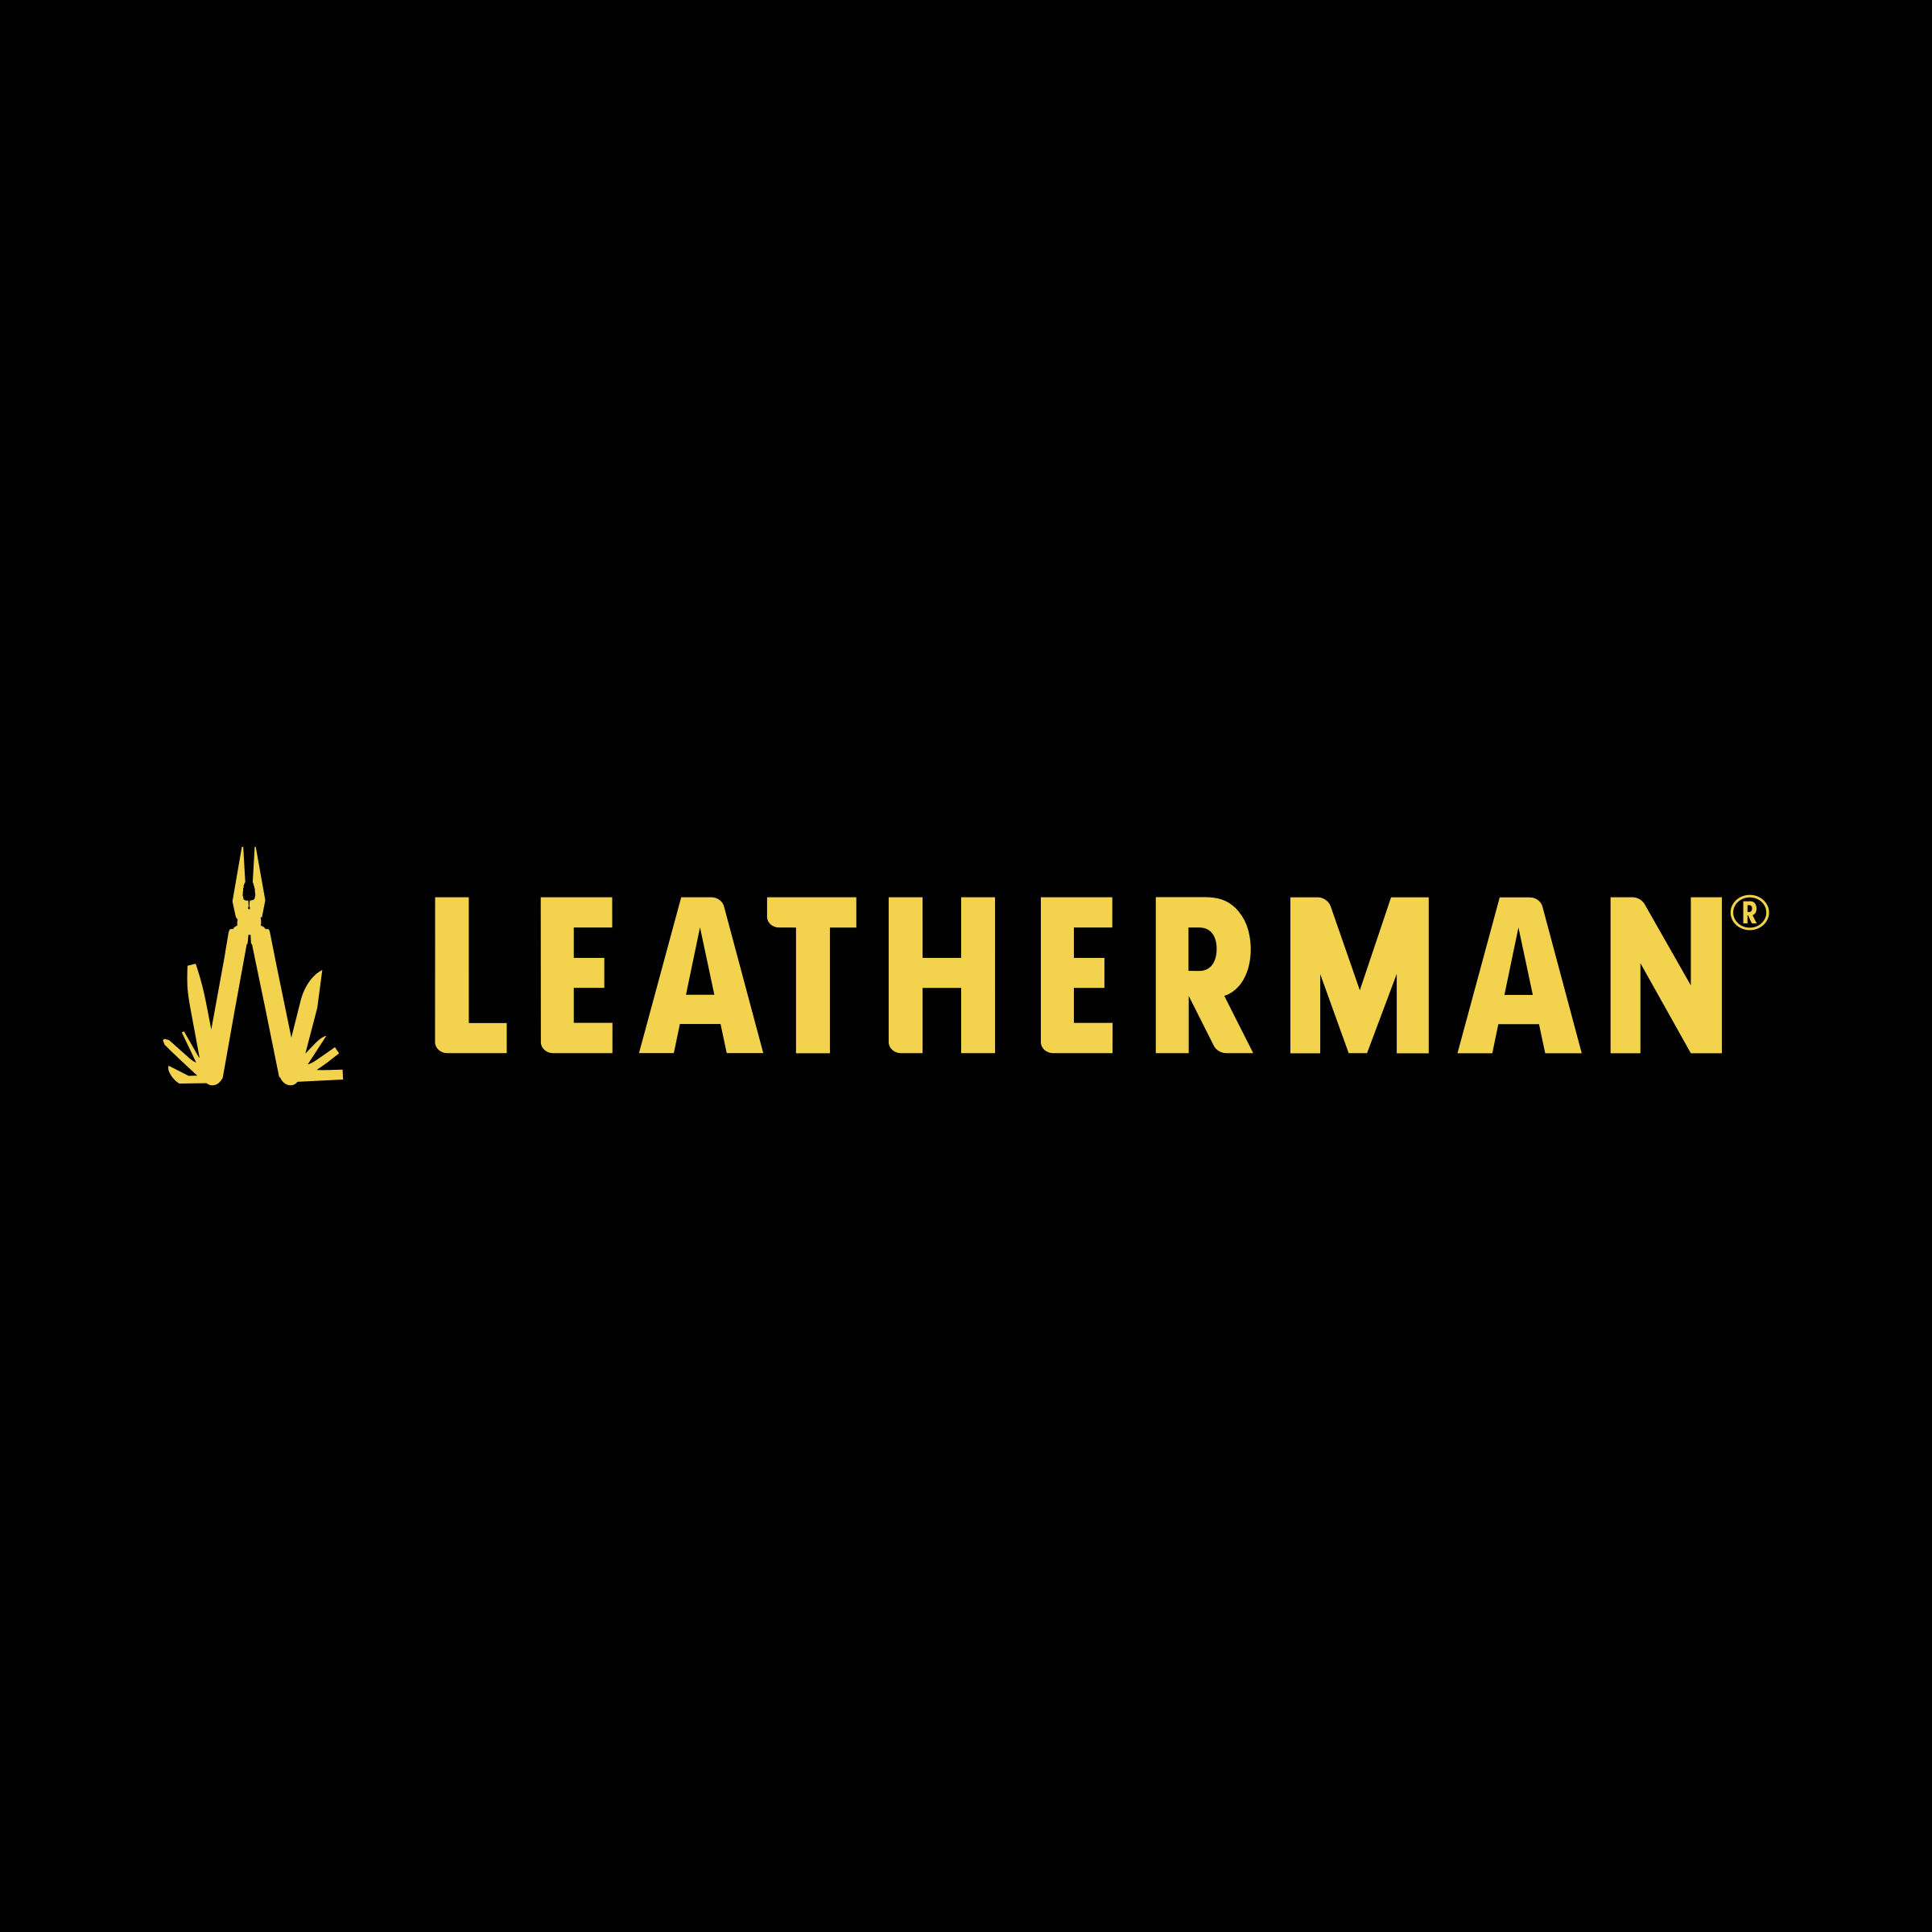 Leatherman Logo - Leatherman Logo PNG Transparent & SVG Vector - Freebie Supply